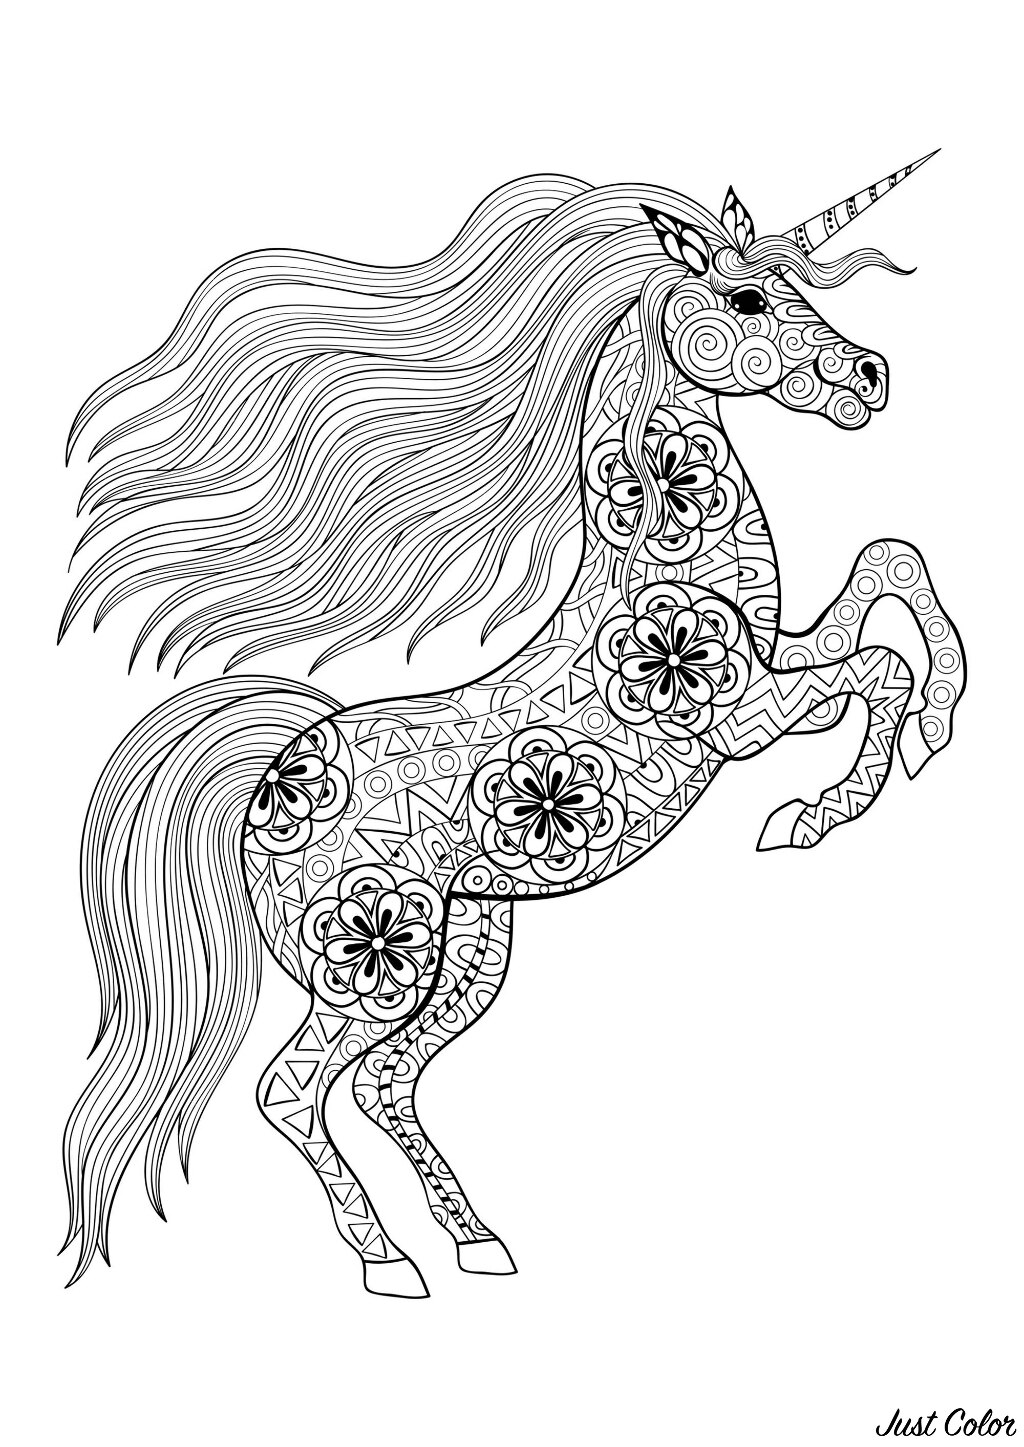 Unicorn on its two back legs